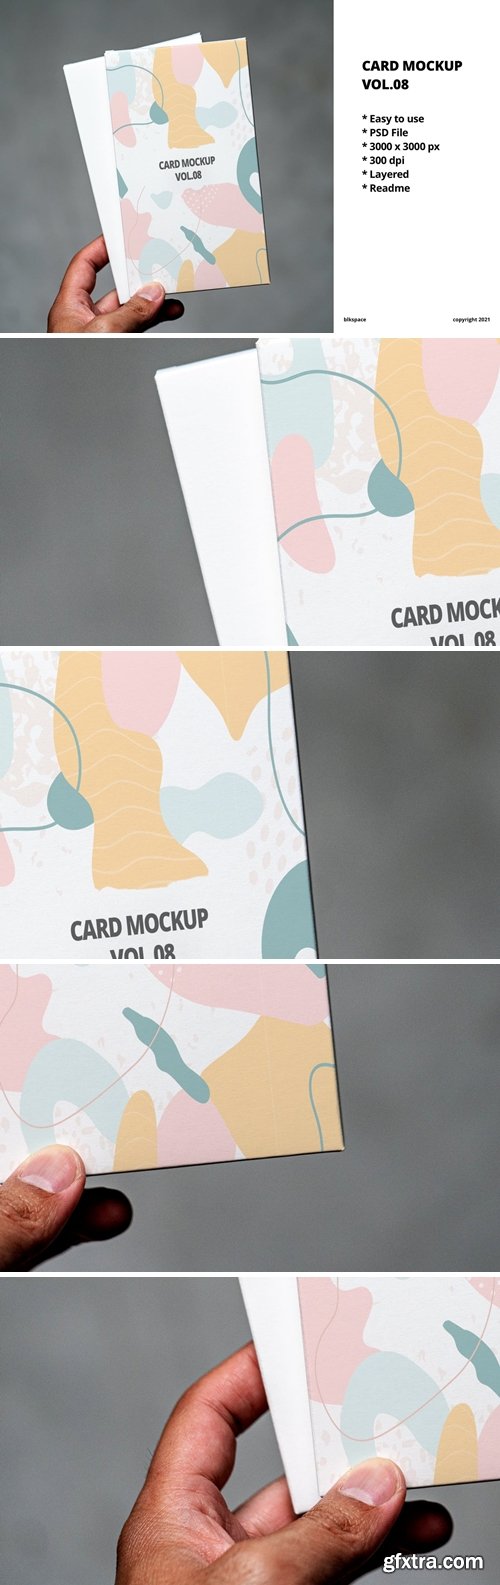 Card Mockup Vol.08